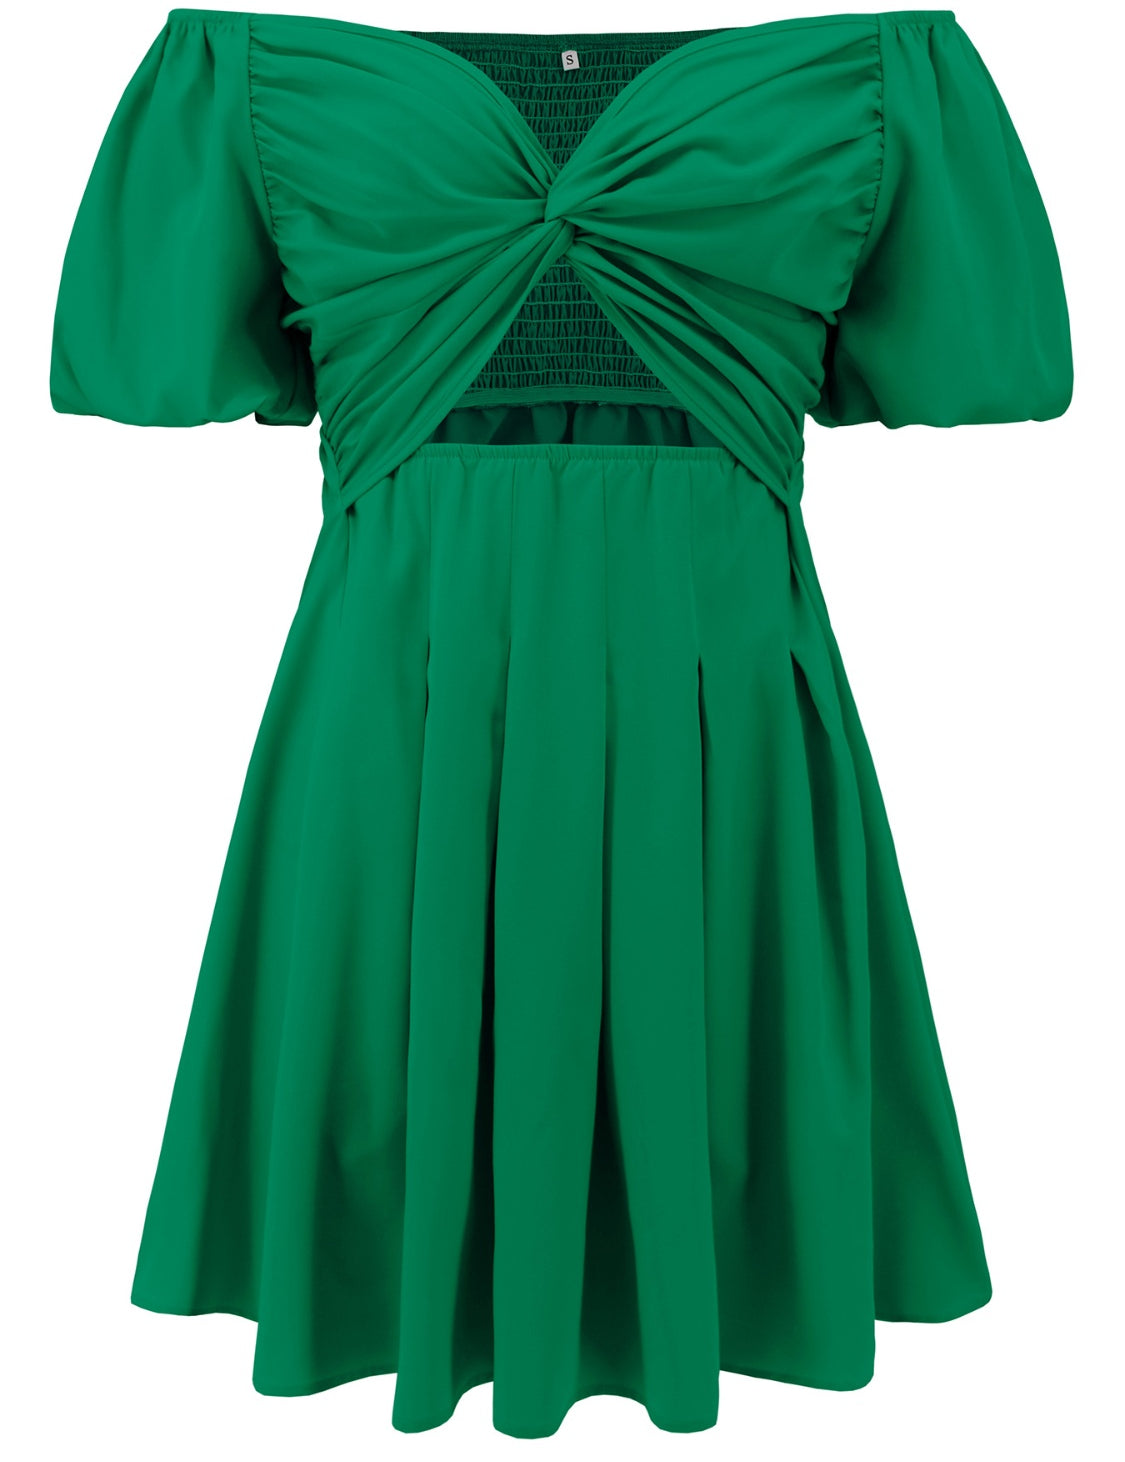 Cutout Twisted Off-Shoulder Short Sleeve Dress